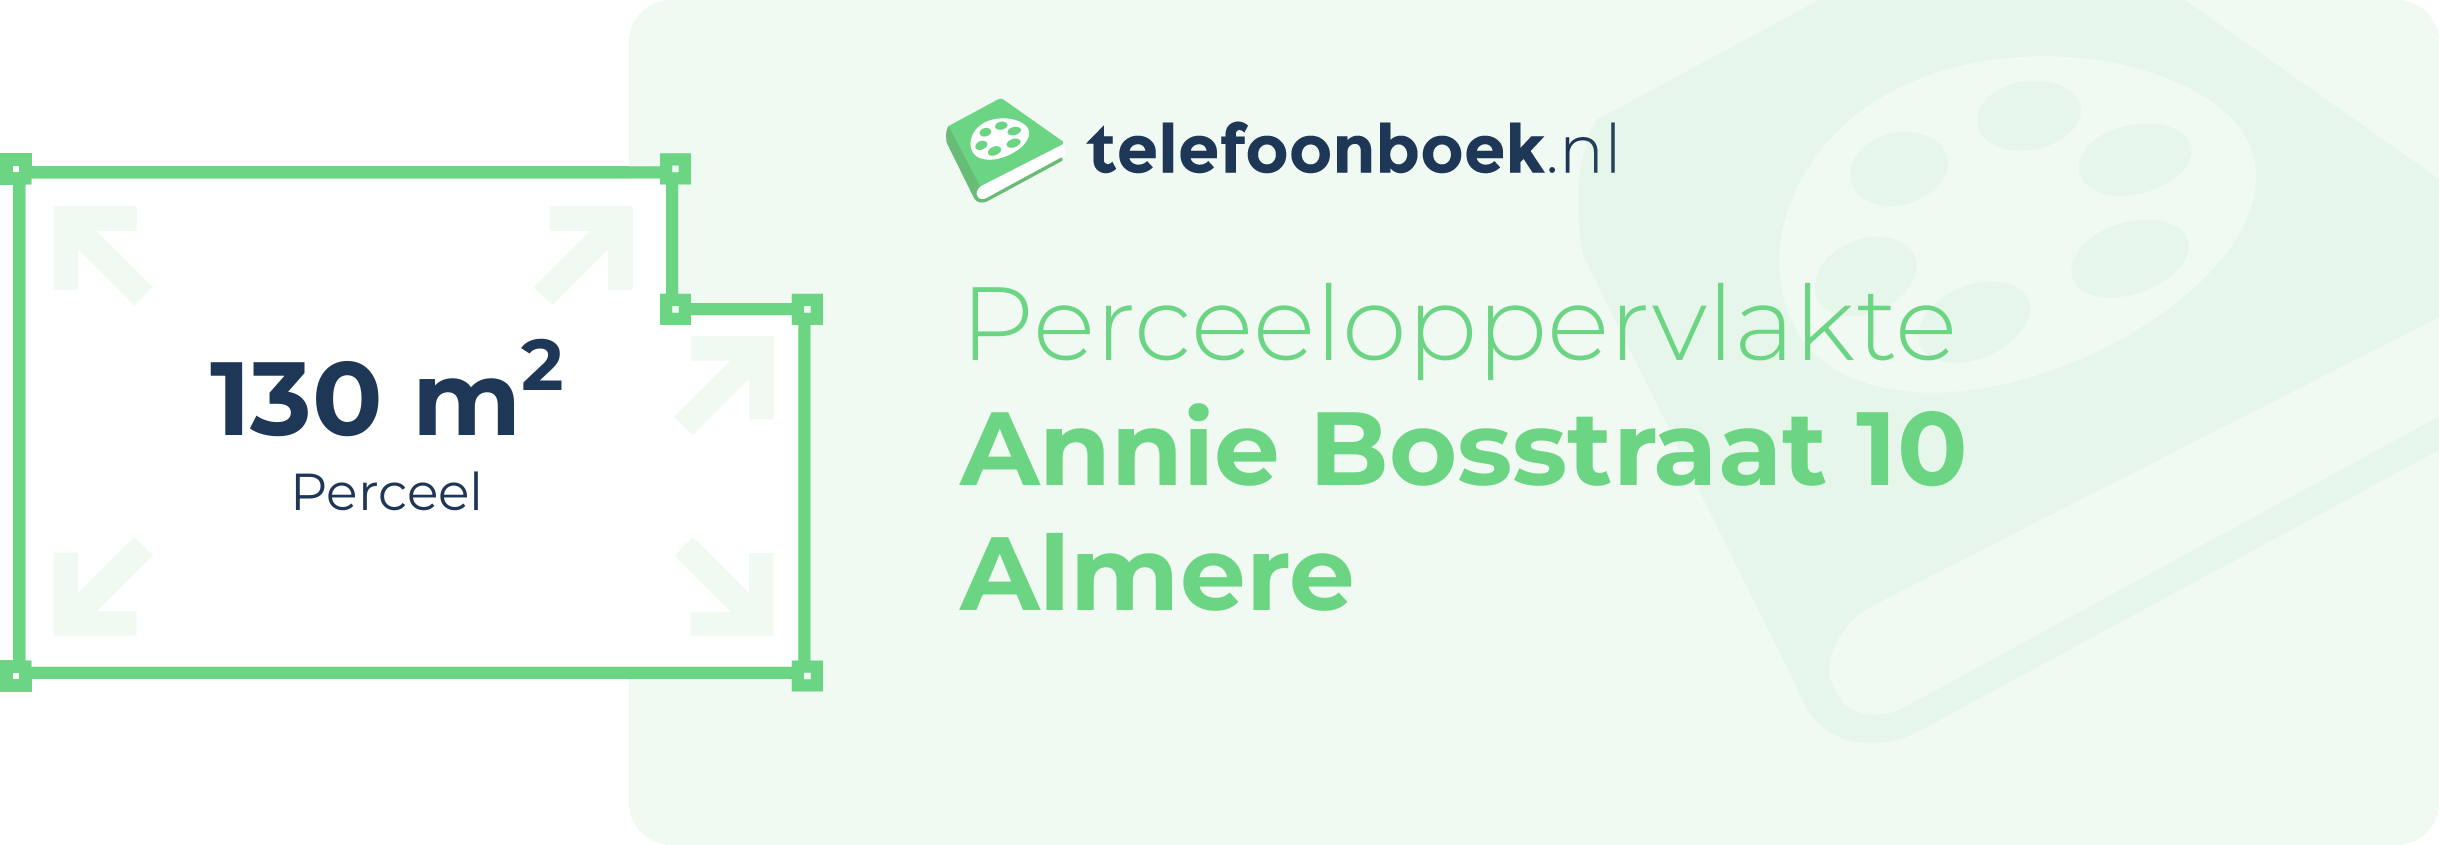 Perceeloppervlakte Annie Bosstraat 10 Almere